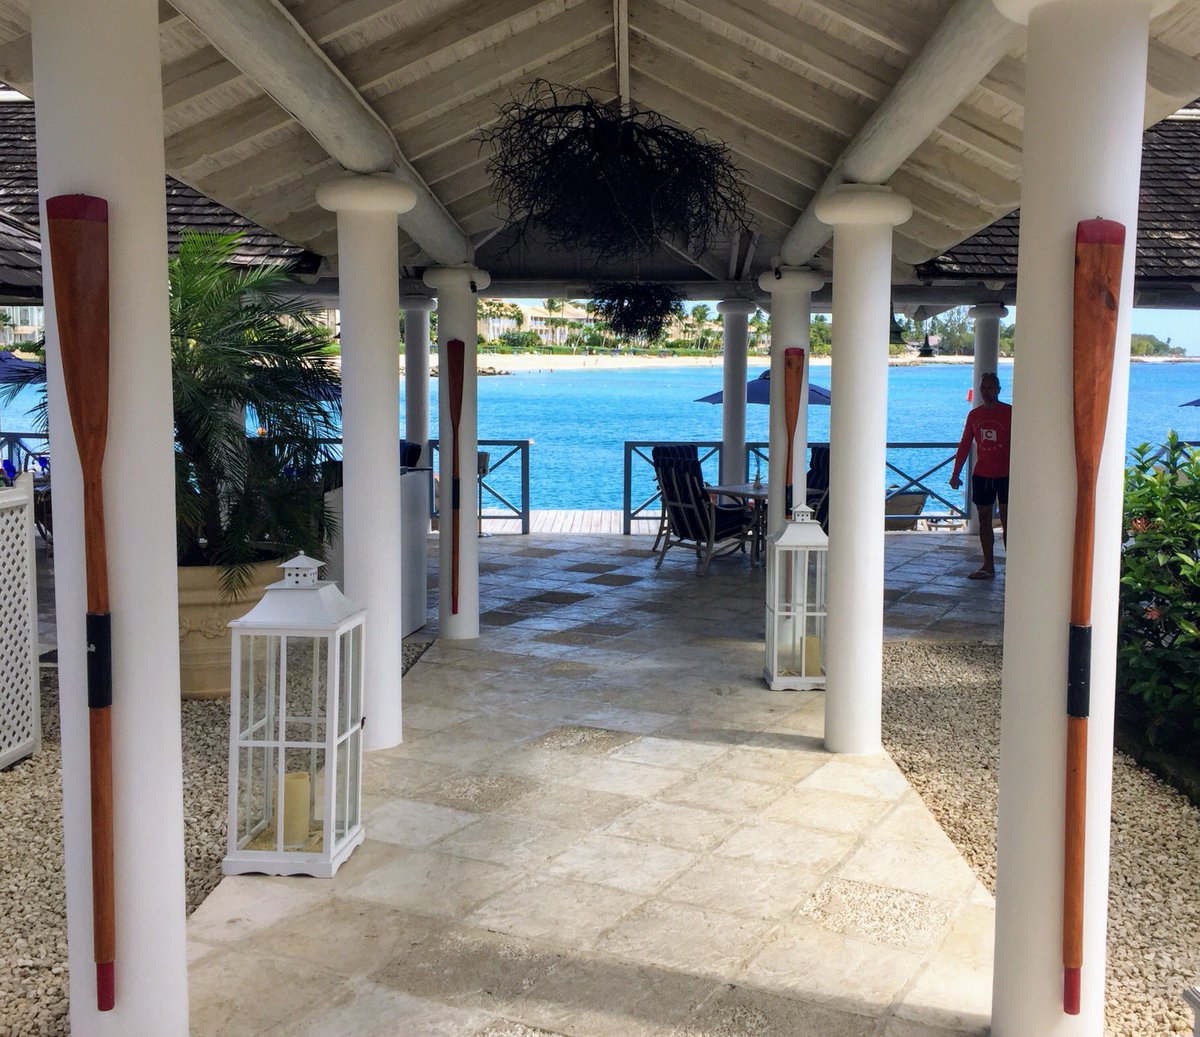 Lovely way to spend the day ❤️#PSCYC #Barbados #SunSeaSwim #Lunch  #YachtClub